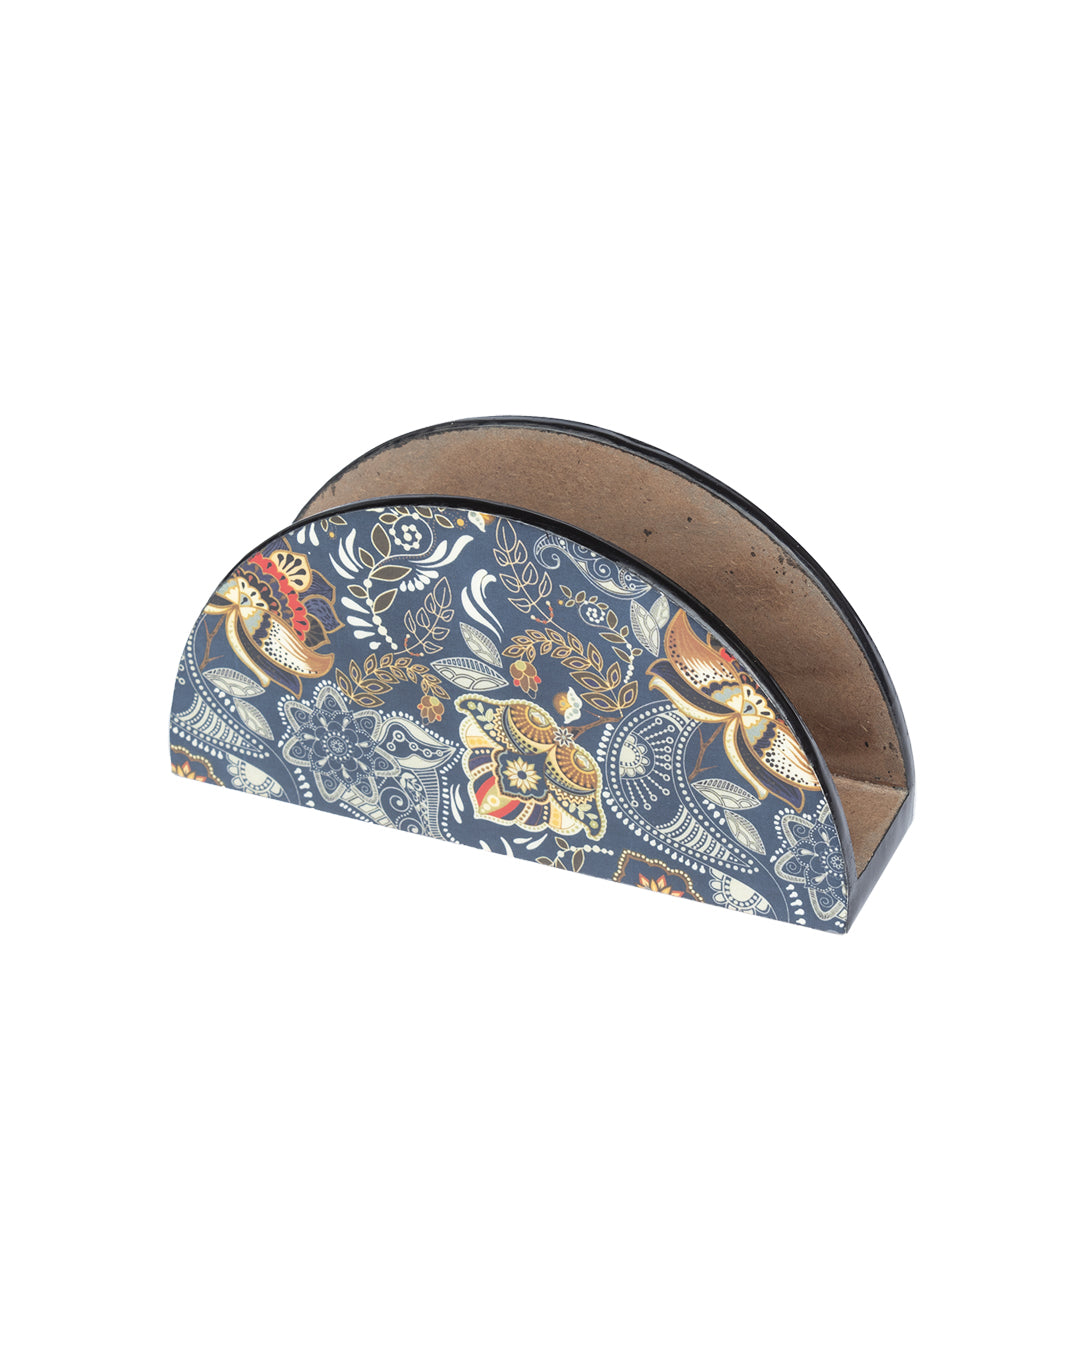 VON CASA Tableware Napkin Box (1 Pcs, Floral Print)